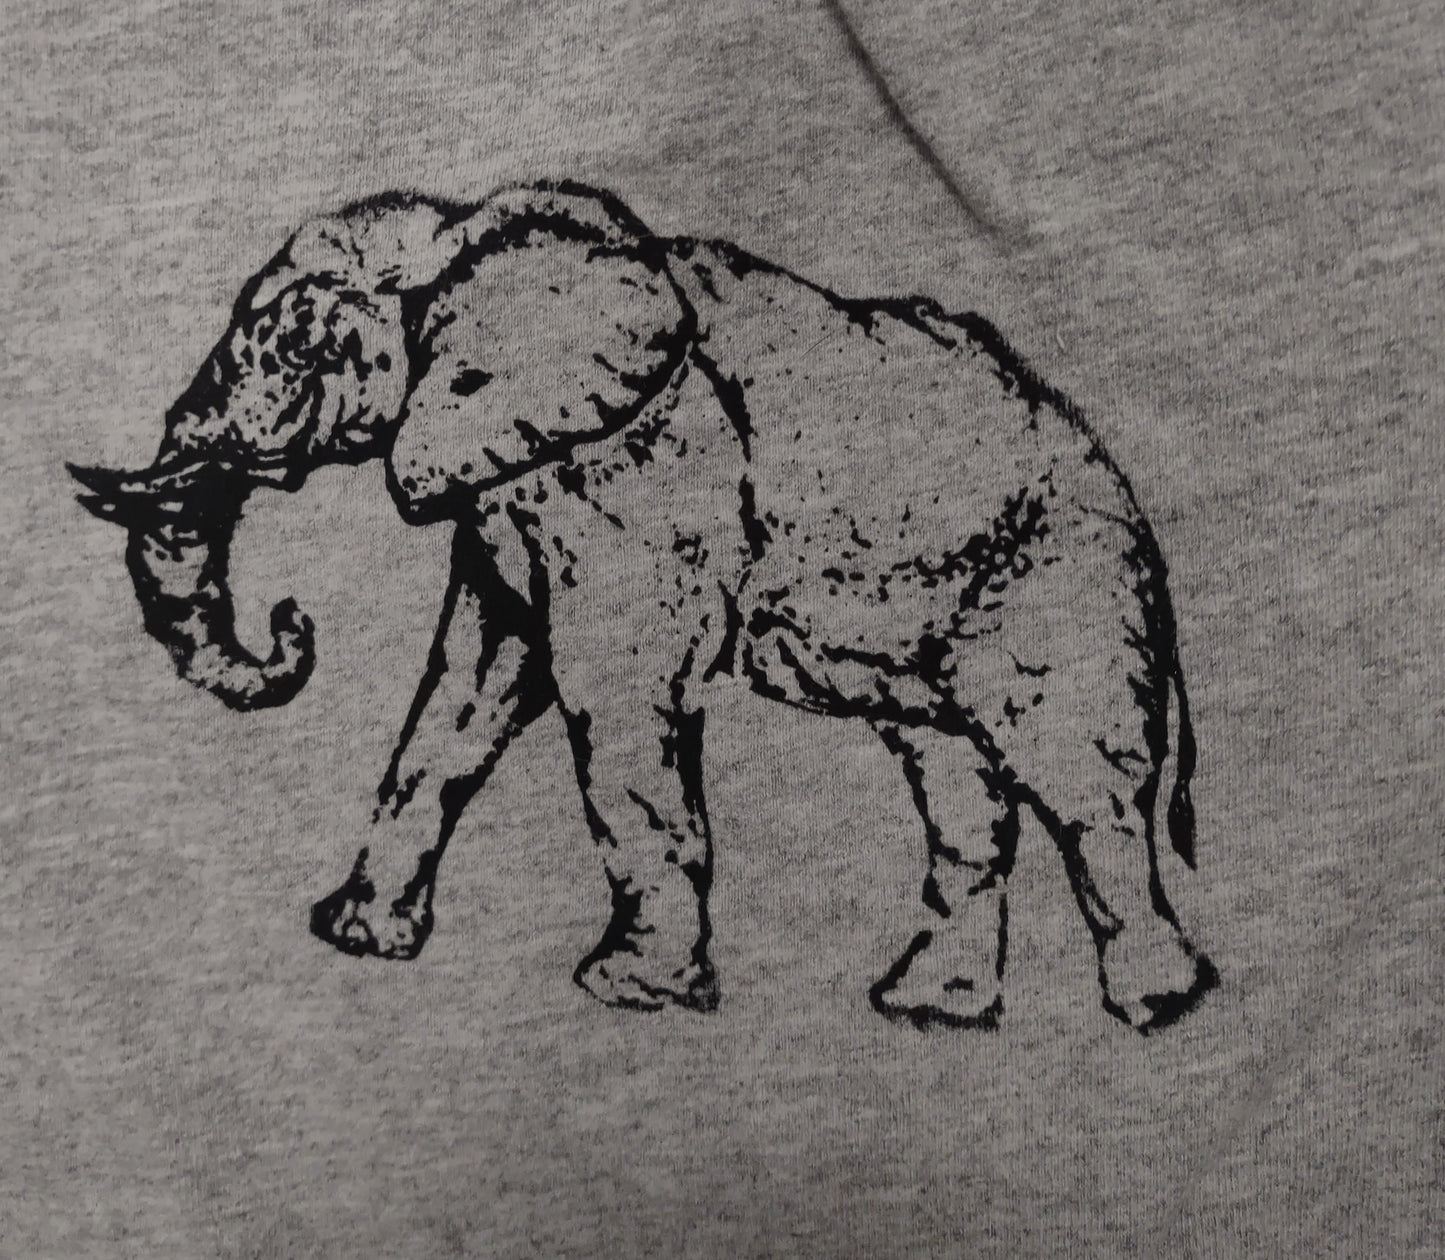 Children's XS elephant shirt